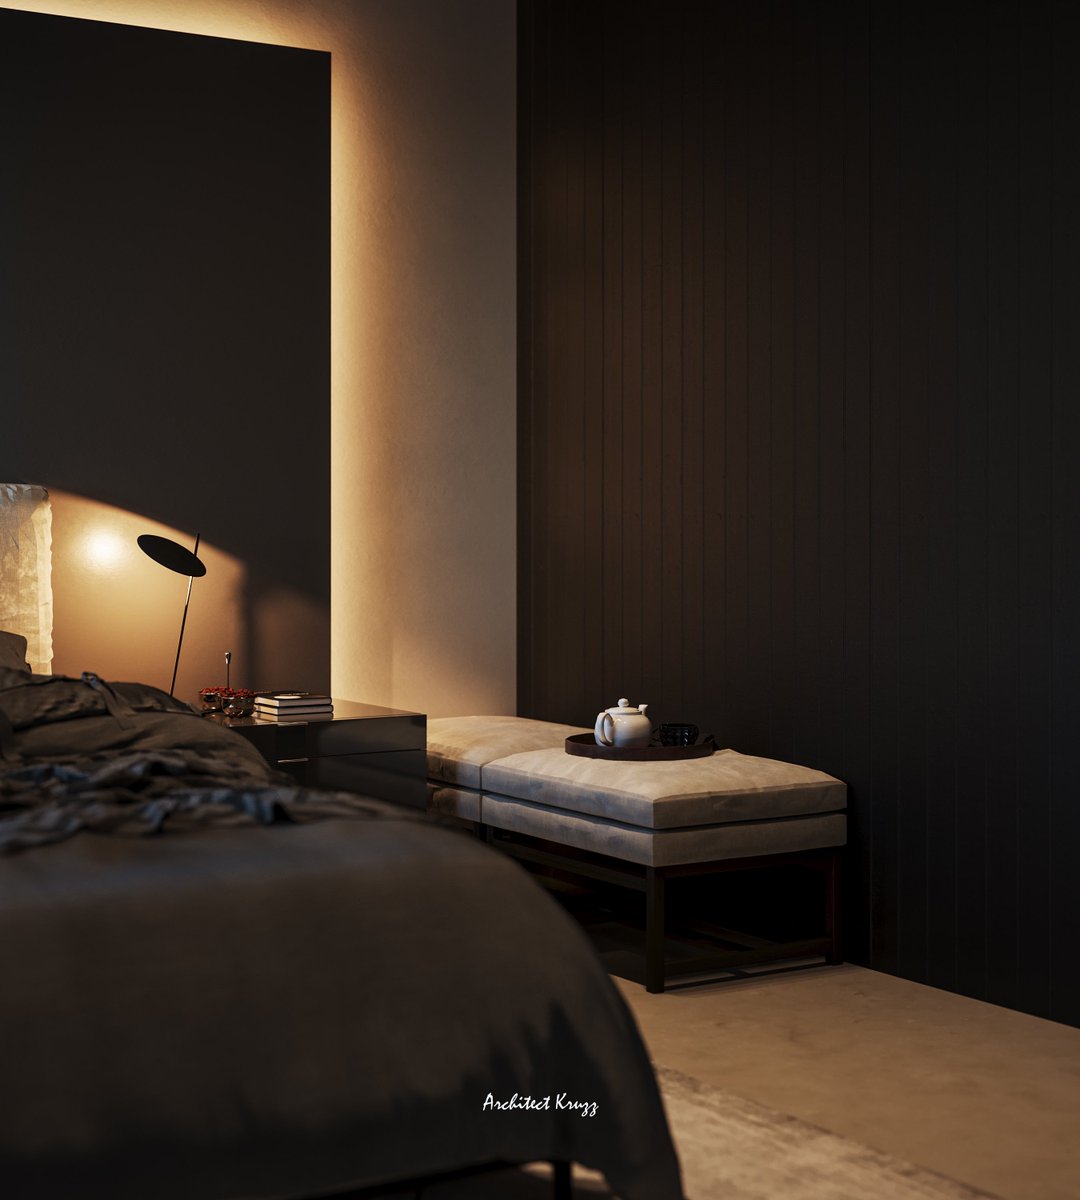 Bedroom

#Architecture #visualization #3dsmax #coronarender #revitarchitecture #photoshop #dark